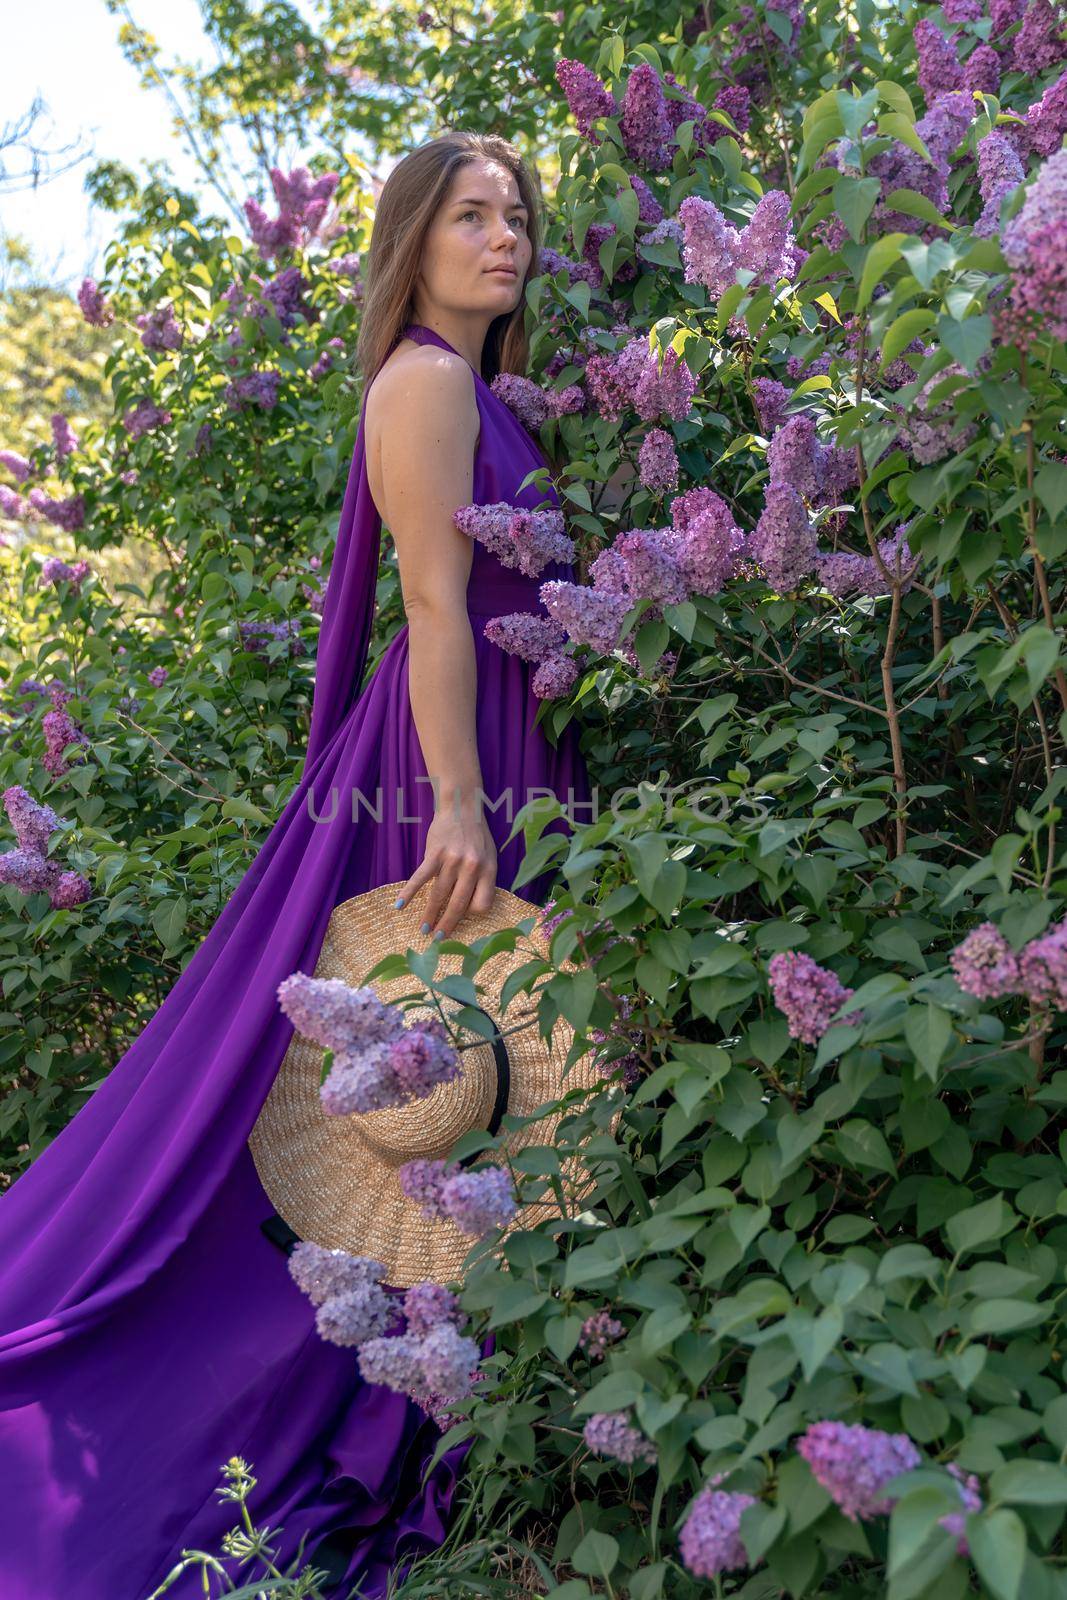 Fashion Model in Lilac Flowers, Young Woman in Beautiful Long Dress Waving on Wind, Outdoor Beauty Portrait in Blooming Garden.